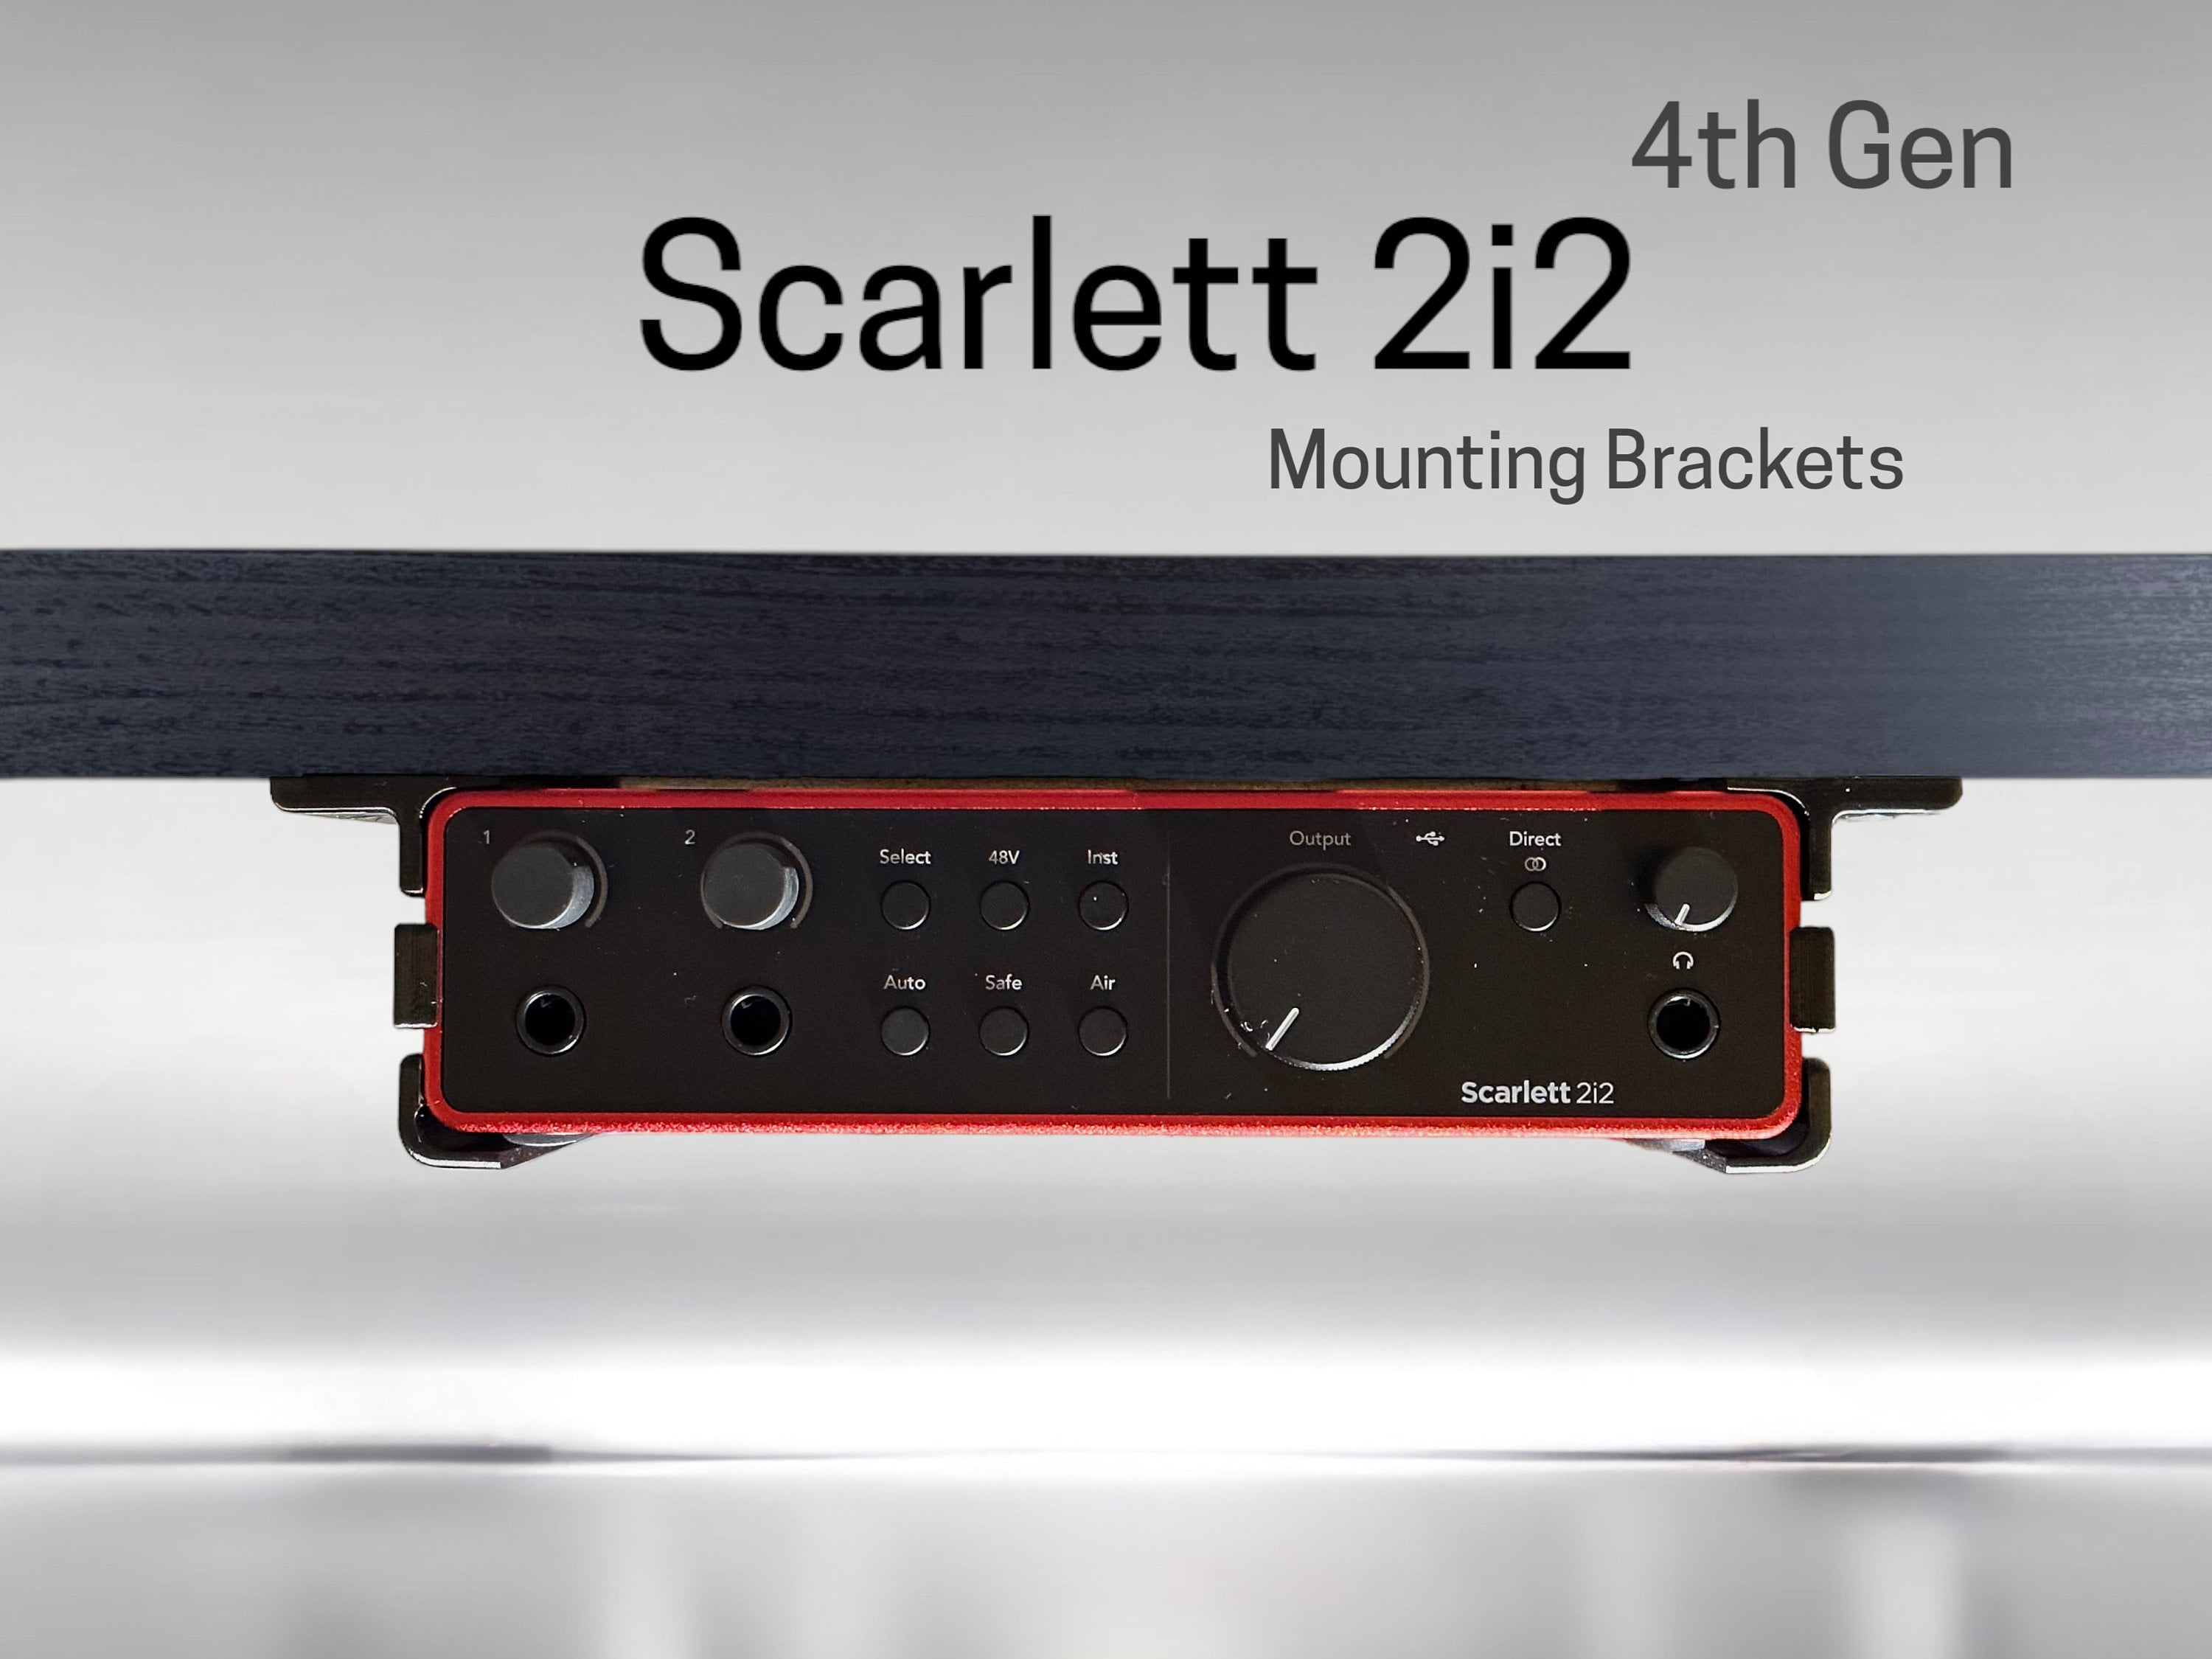 Meet the Focusrite Scarlett 4th Generation audio interfaces